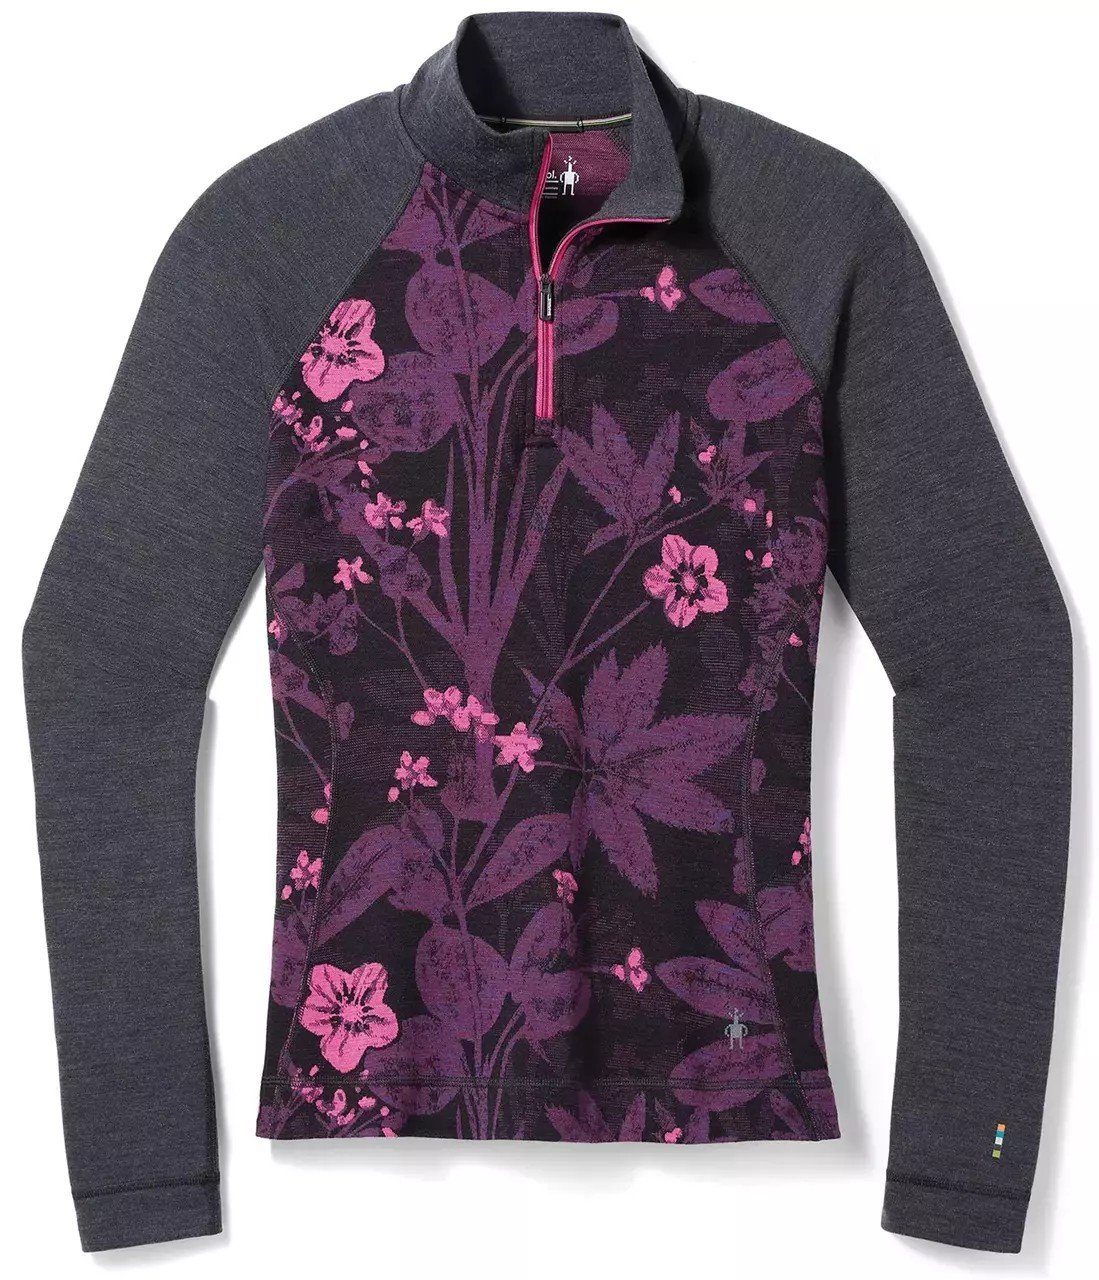 Trangia Funktionsunterhemd Classic Thermal 1/4 Zip Women purple iris floral | Funktionsunterhemden